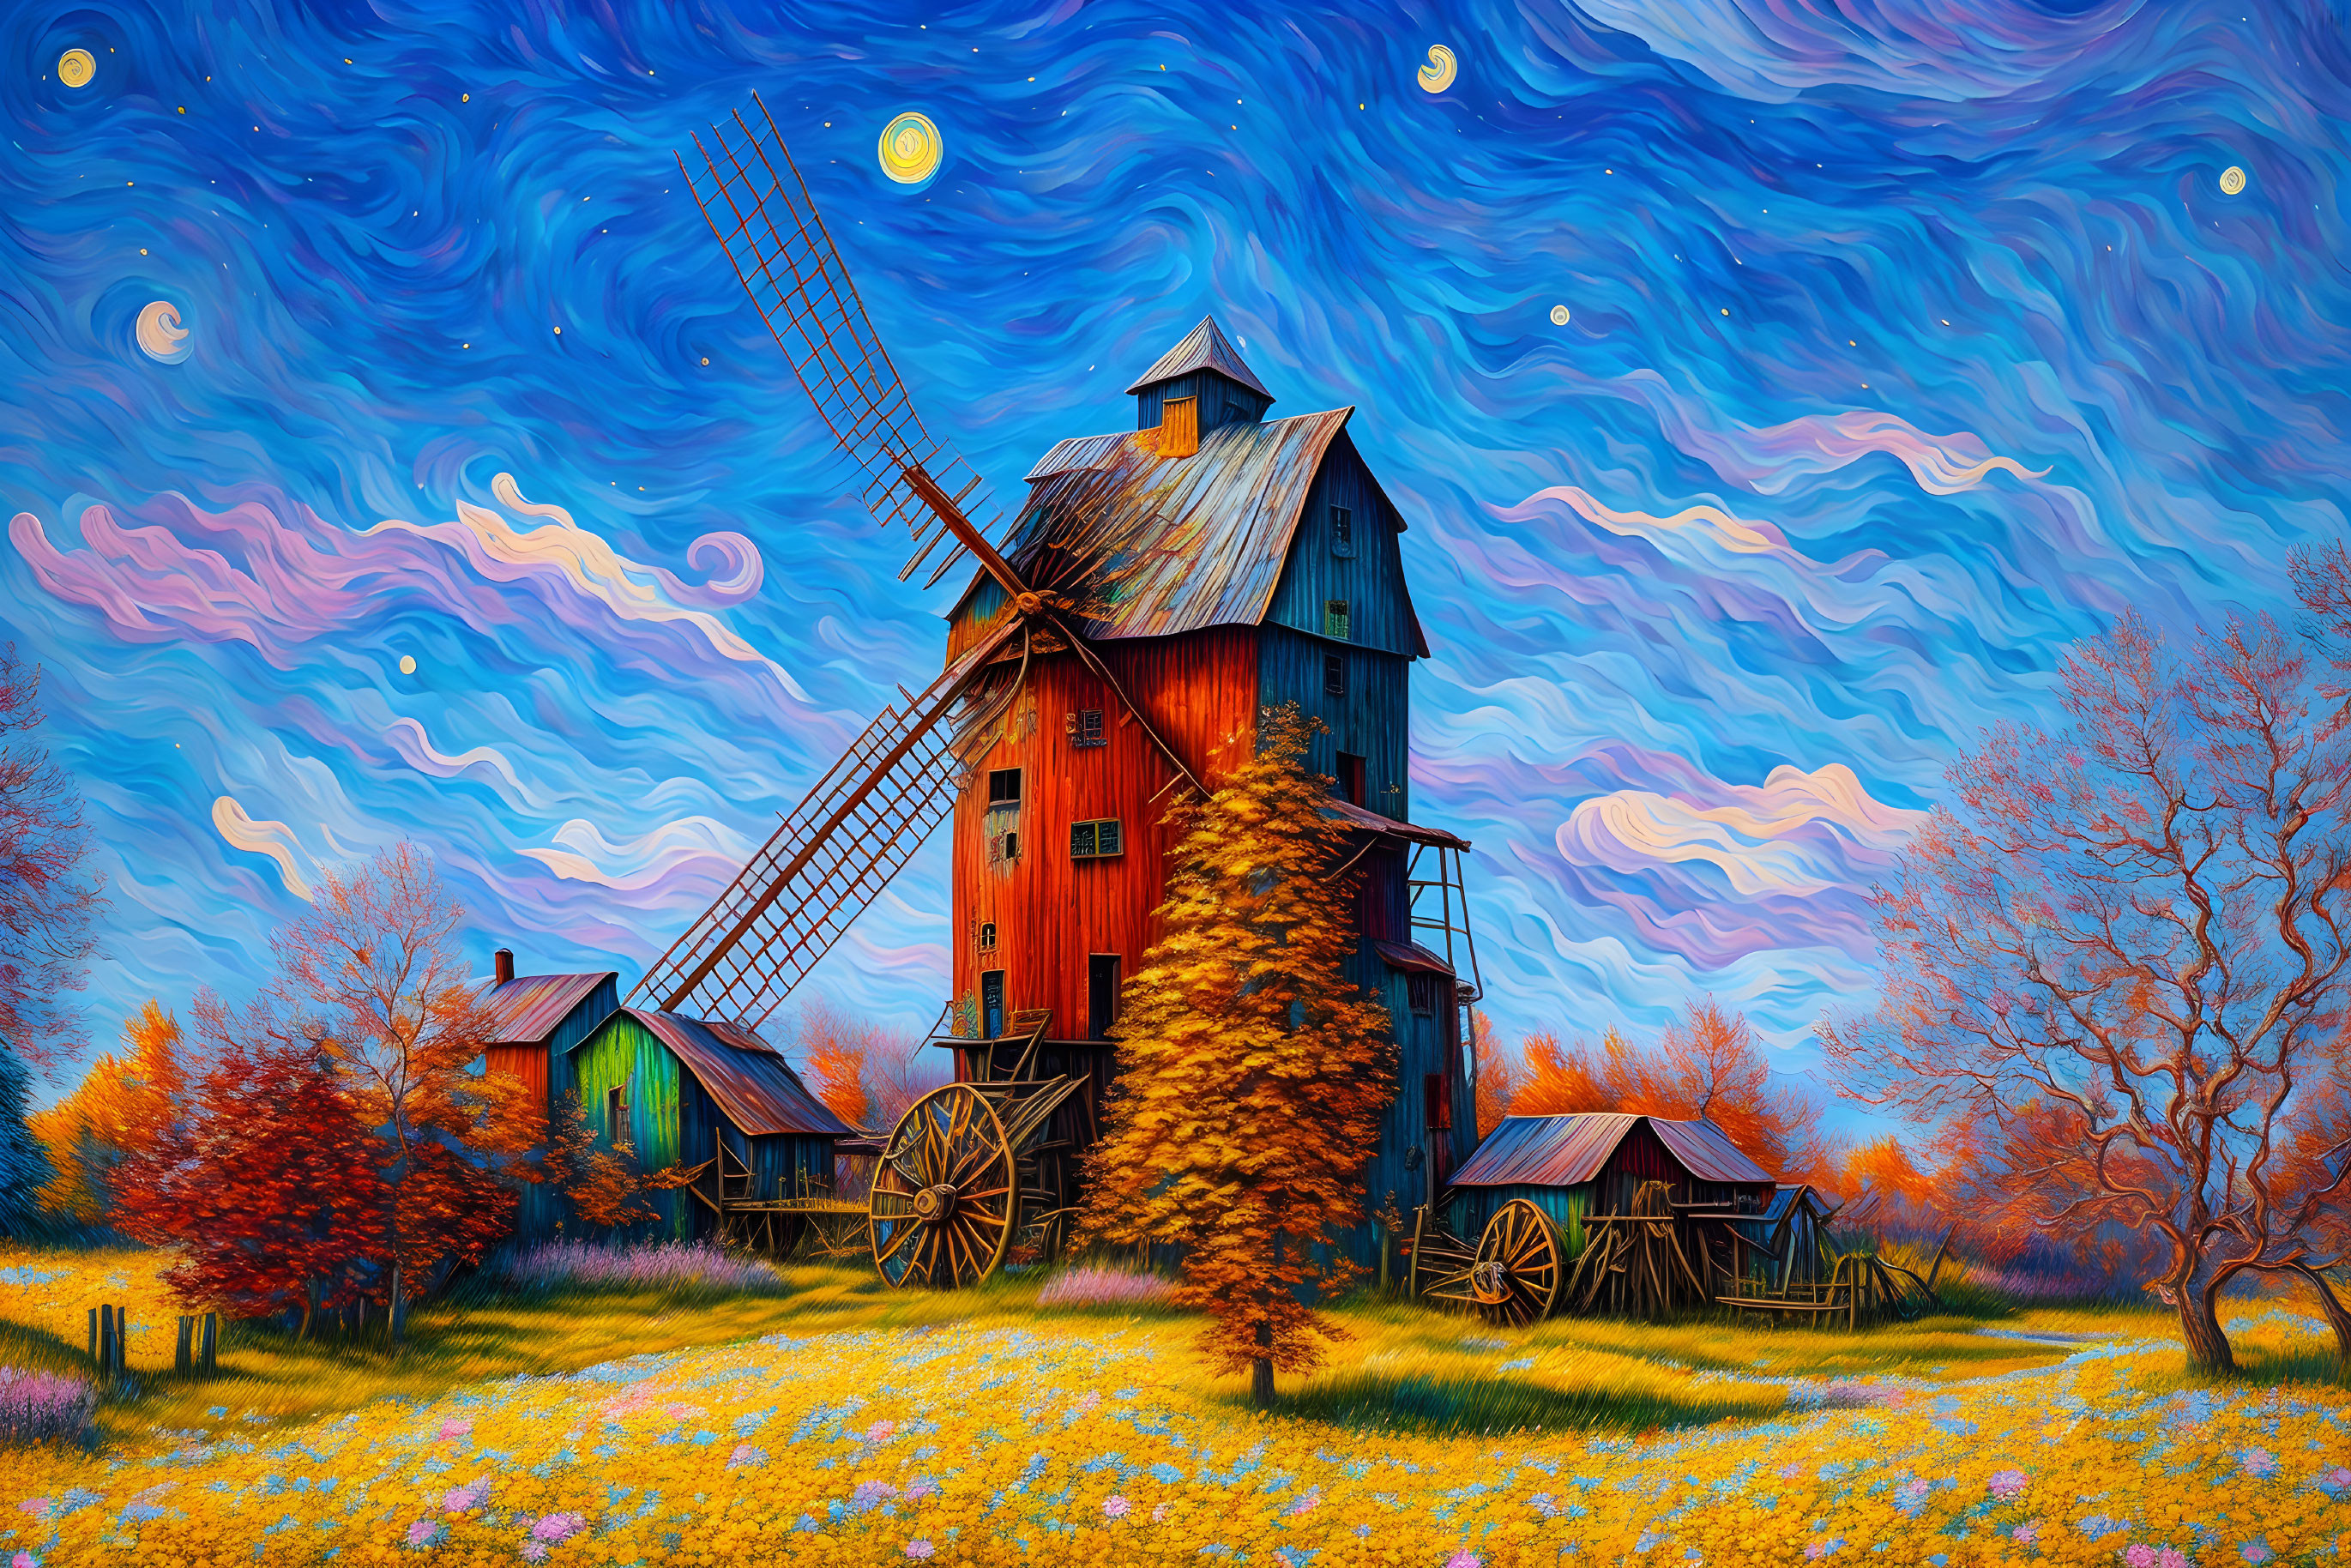 Old Mill on the Prairie, style of van Gogh